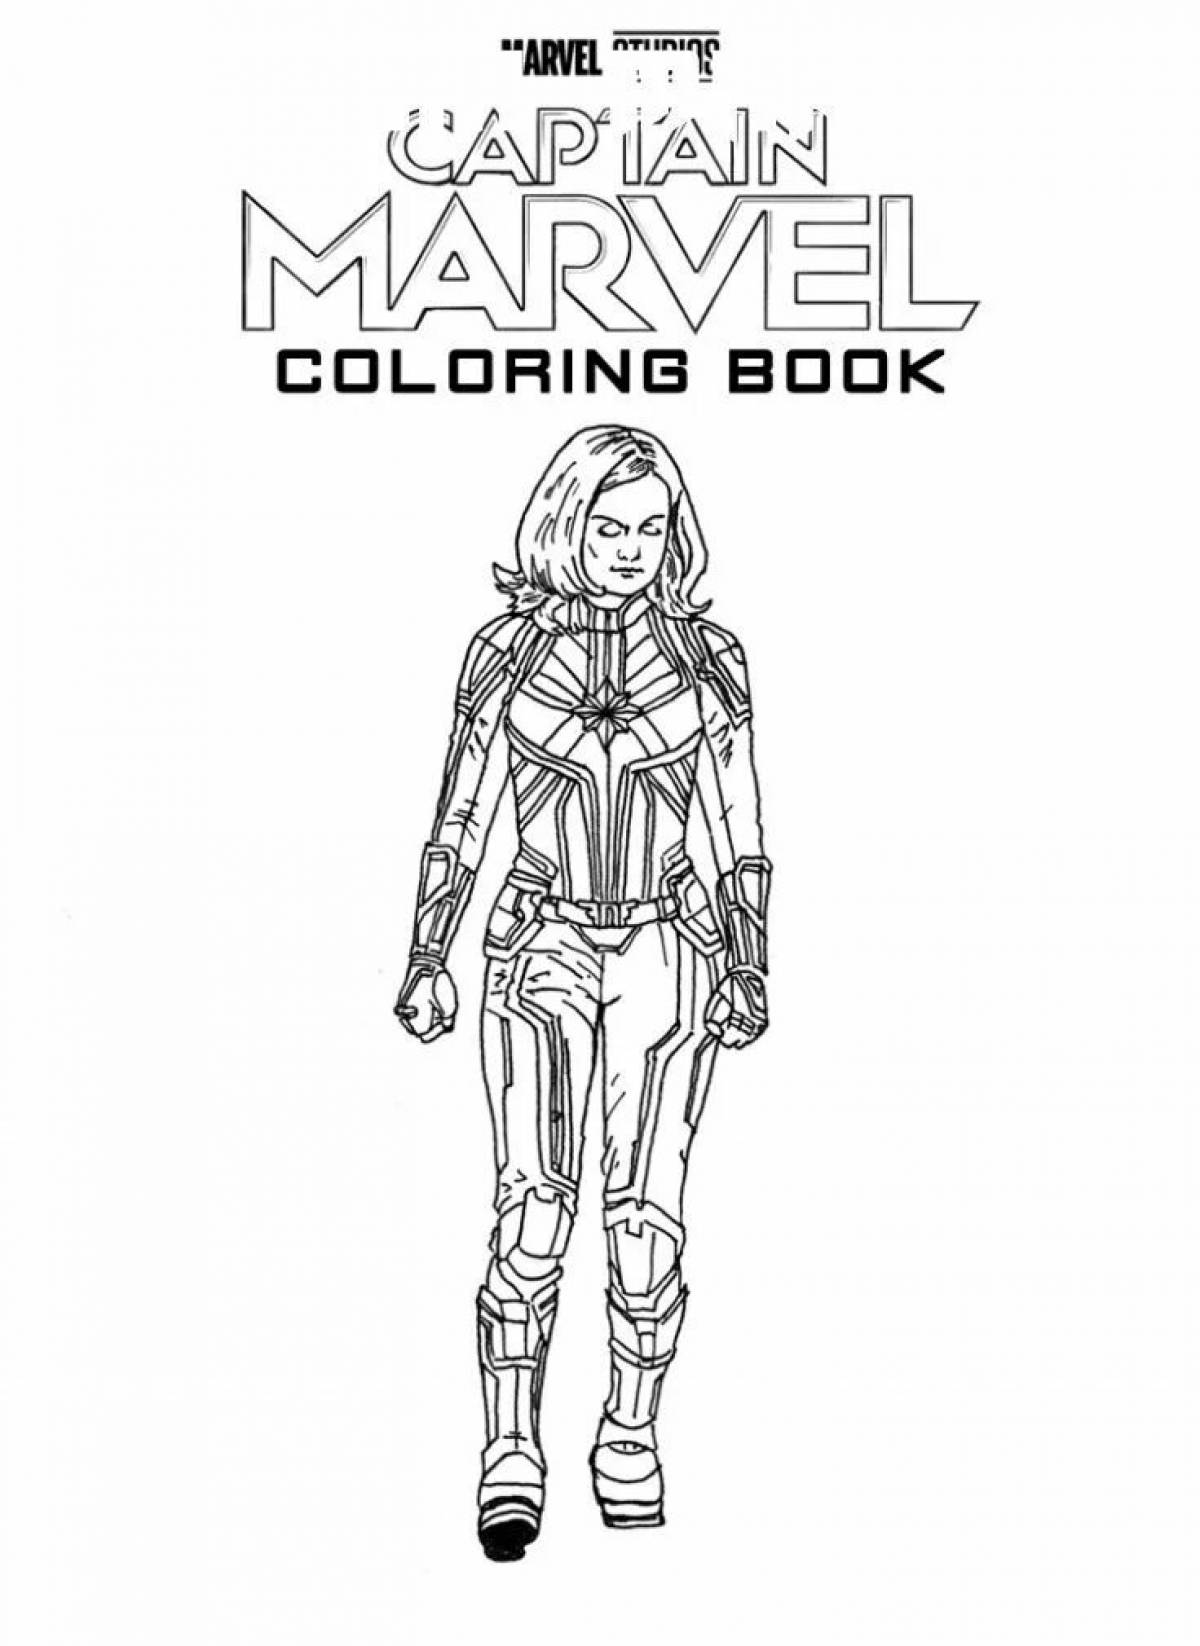 Attractive captain marvel coloring book